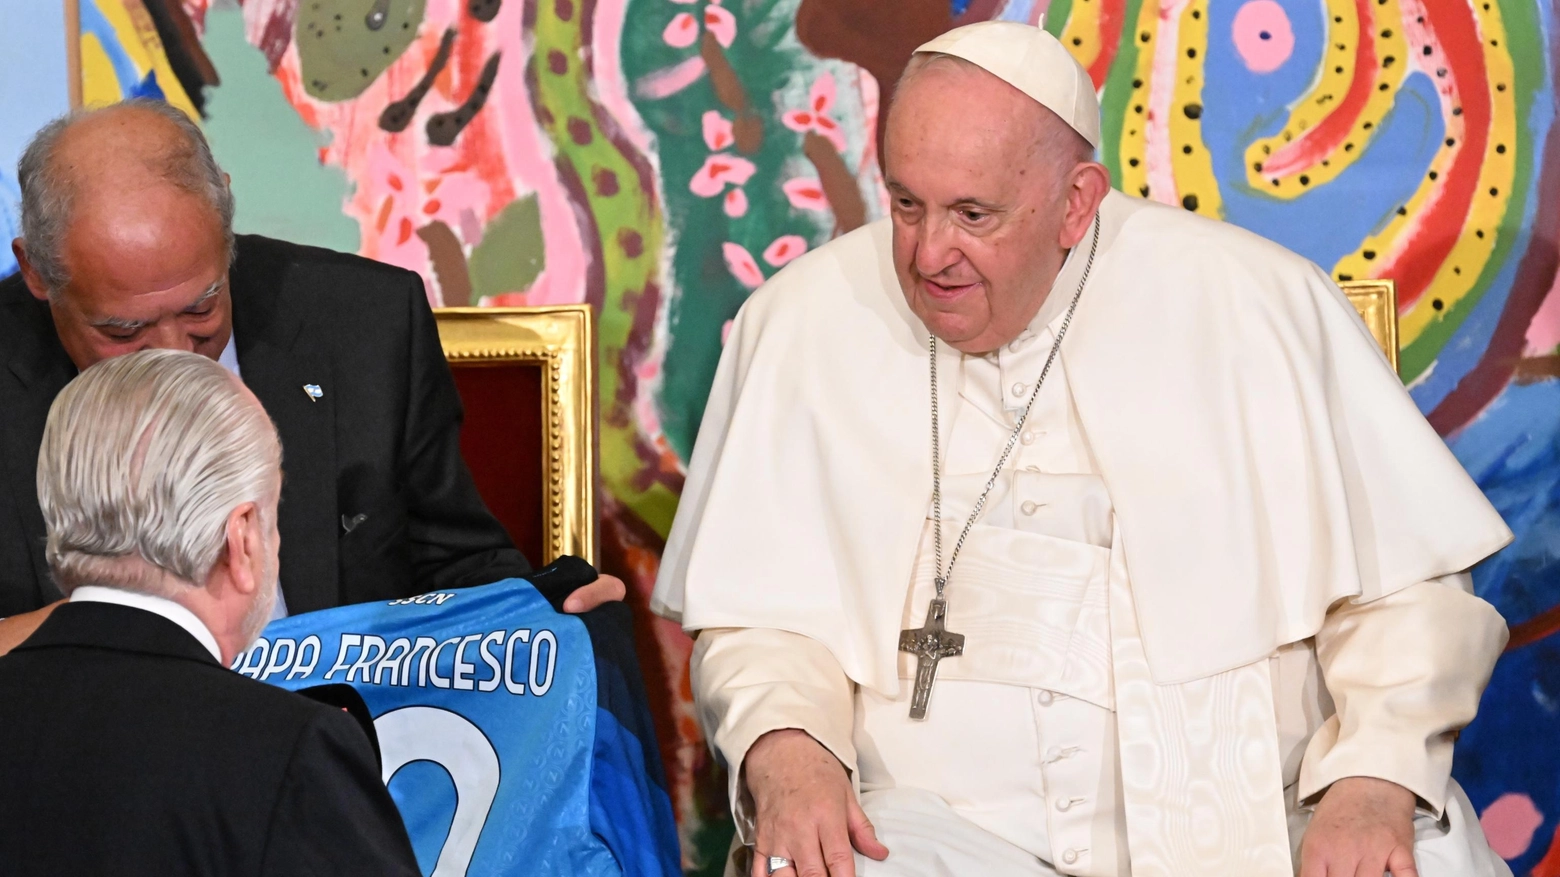 De Laurentiis dona al Papa maglia del Napoli col numero 10 appartenuto al 'Pibe de oro' Diego Armando Maradona